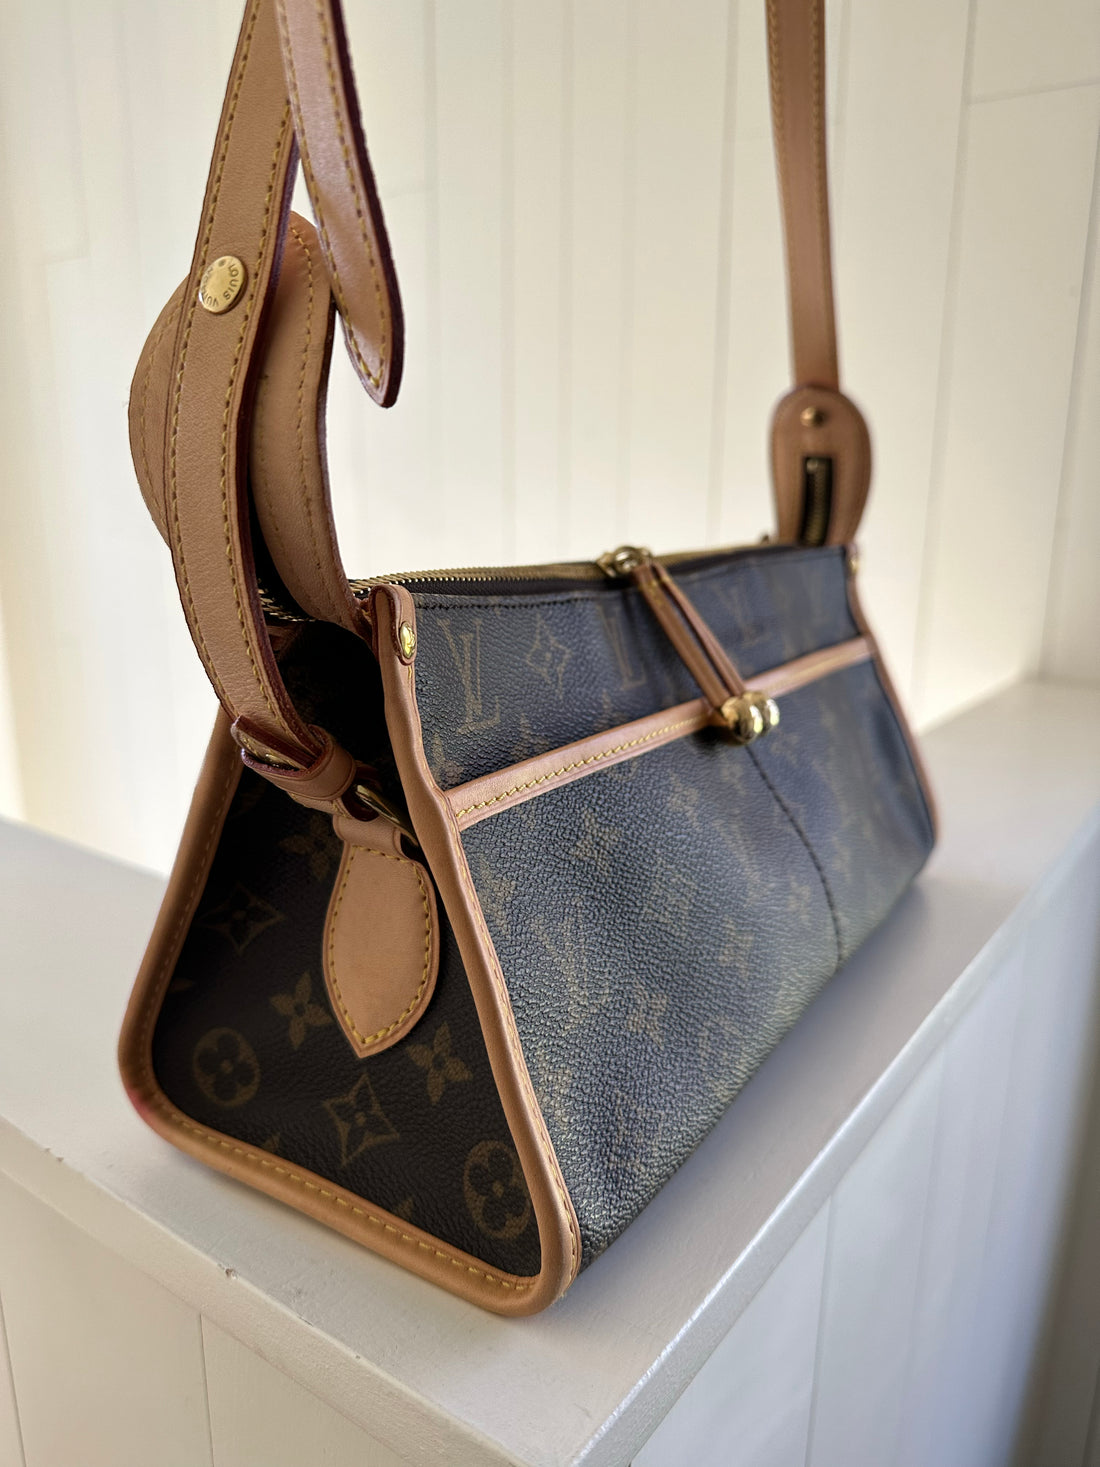 Handbag Social Club: Shop Vintage Luxury Handbags